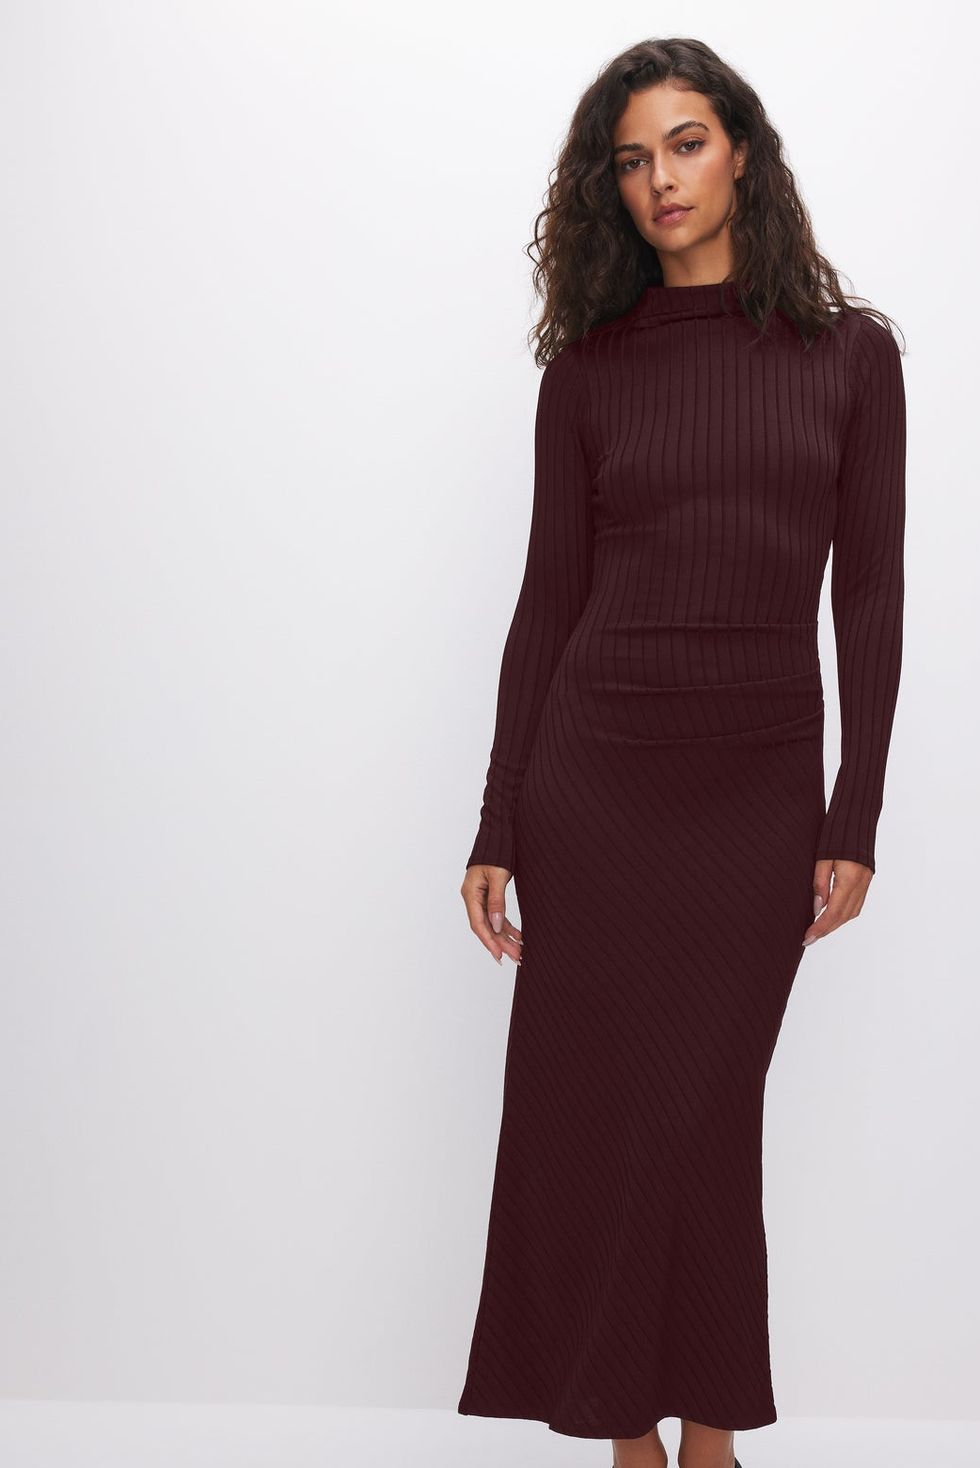 15 Best Sweater Dresses for Women - Knit Dresses 2023